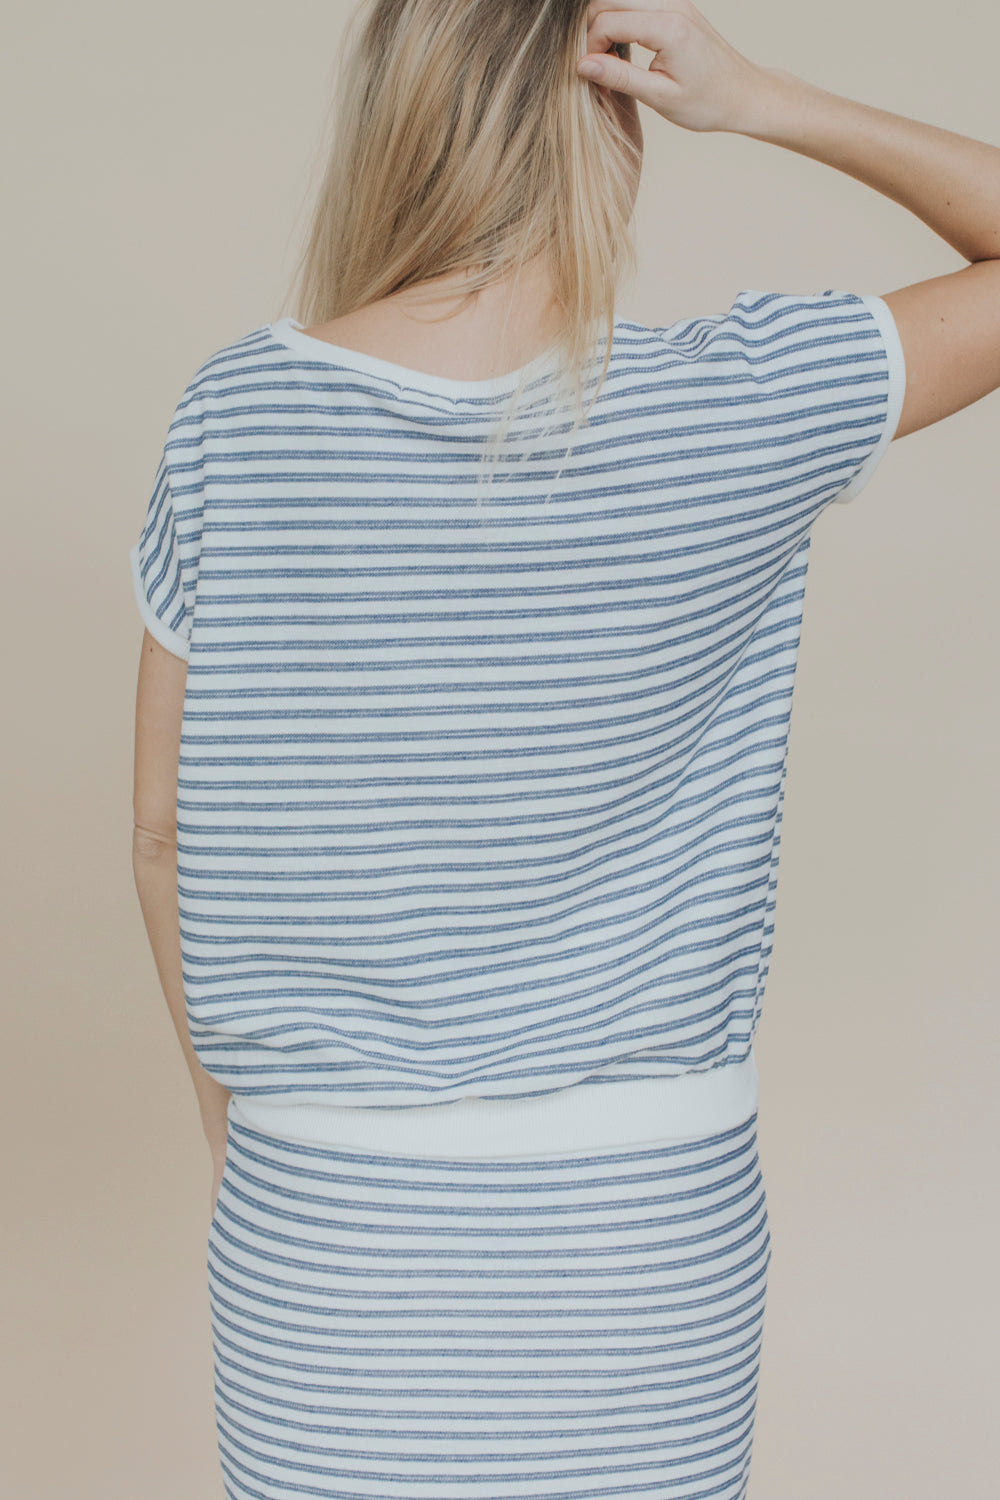 the dão store - Top Mila - Greek Stripes - T-shirts | Tops